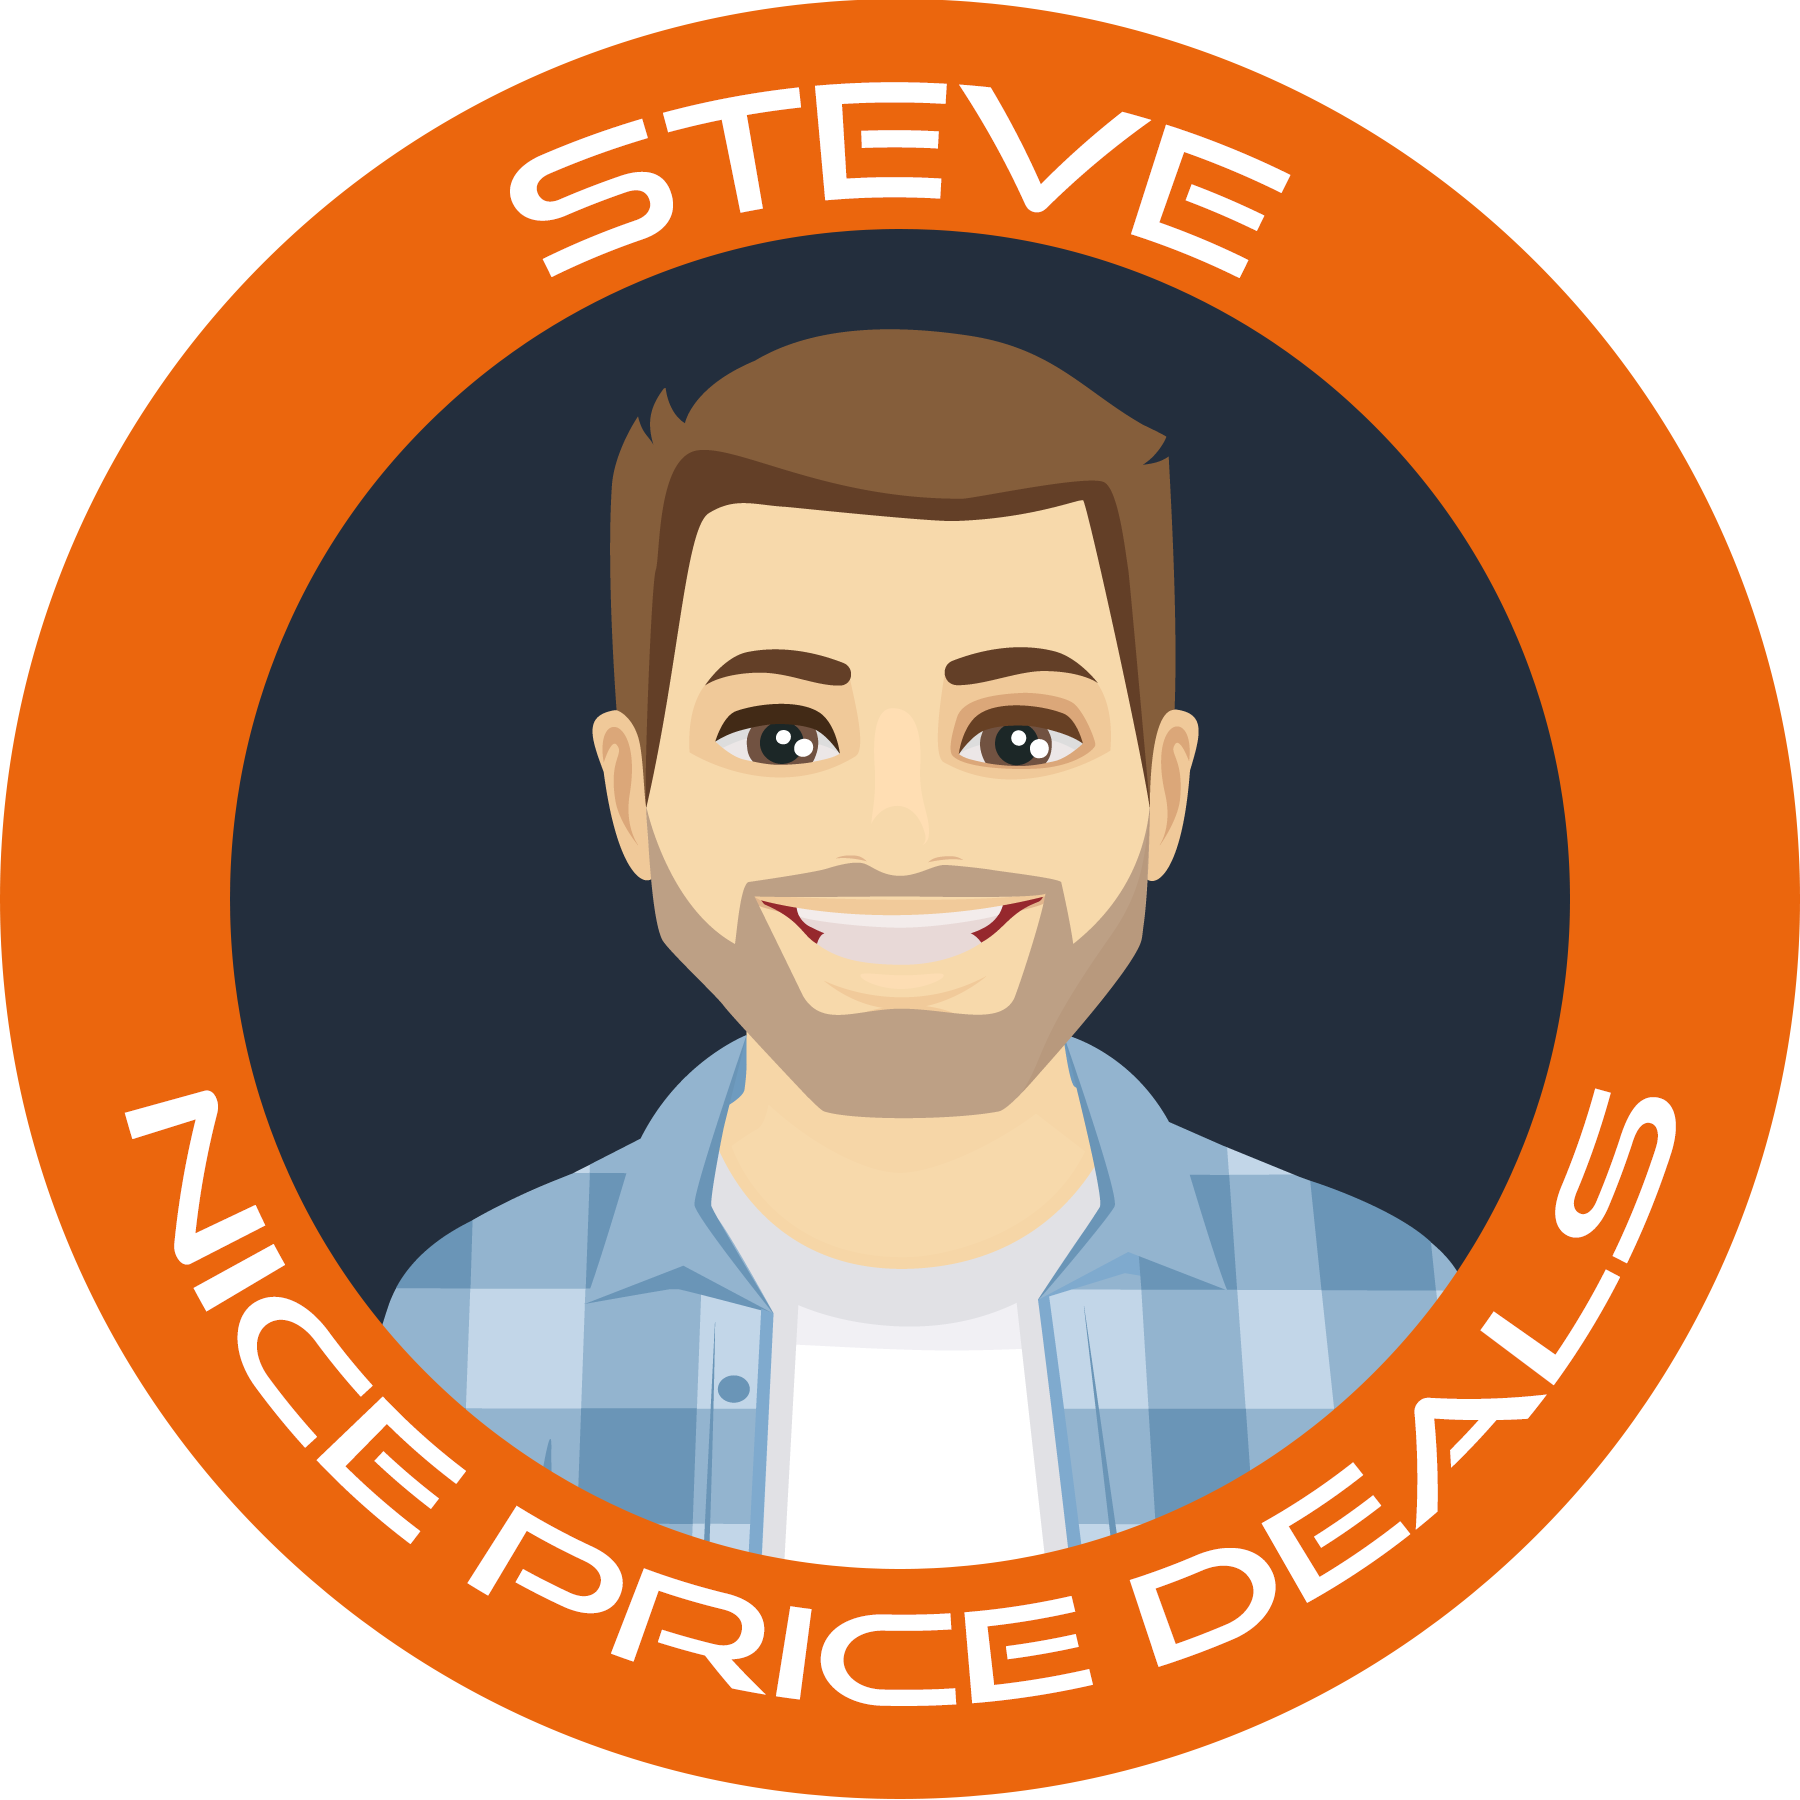 Steve Nice Price Deals